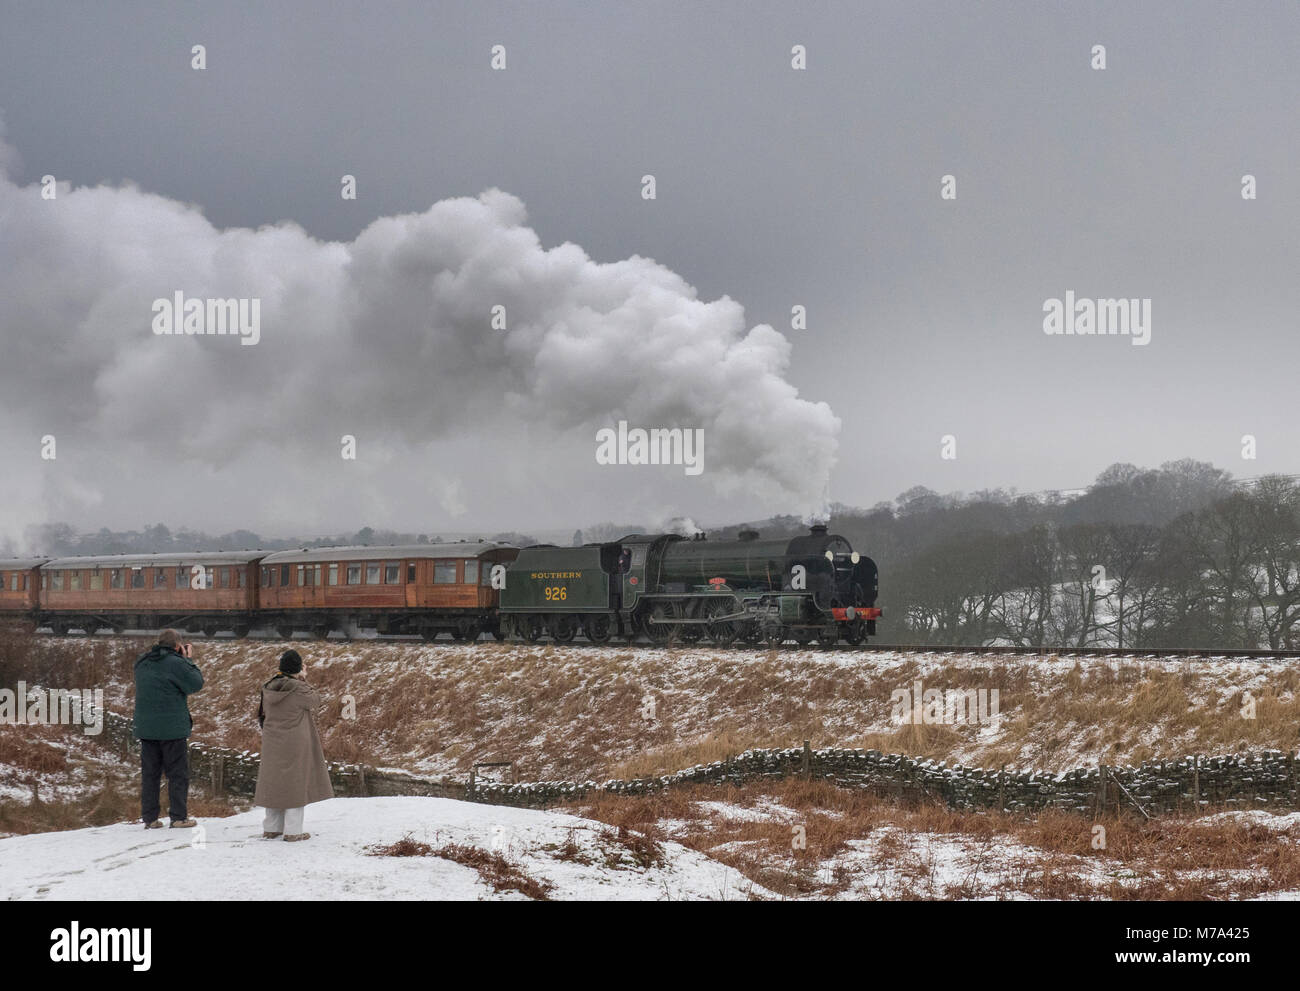 North Yorks Moors Railway. Train enthusiasts watch steam locomotive :Repton pulling train to Pickering Yorkshire UK Stock Photo